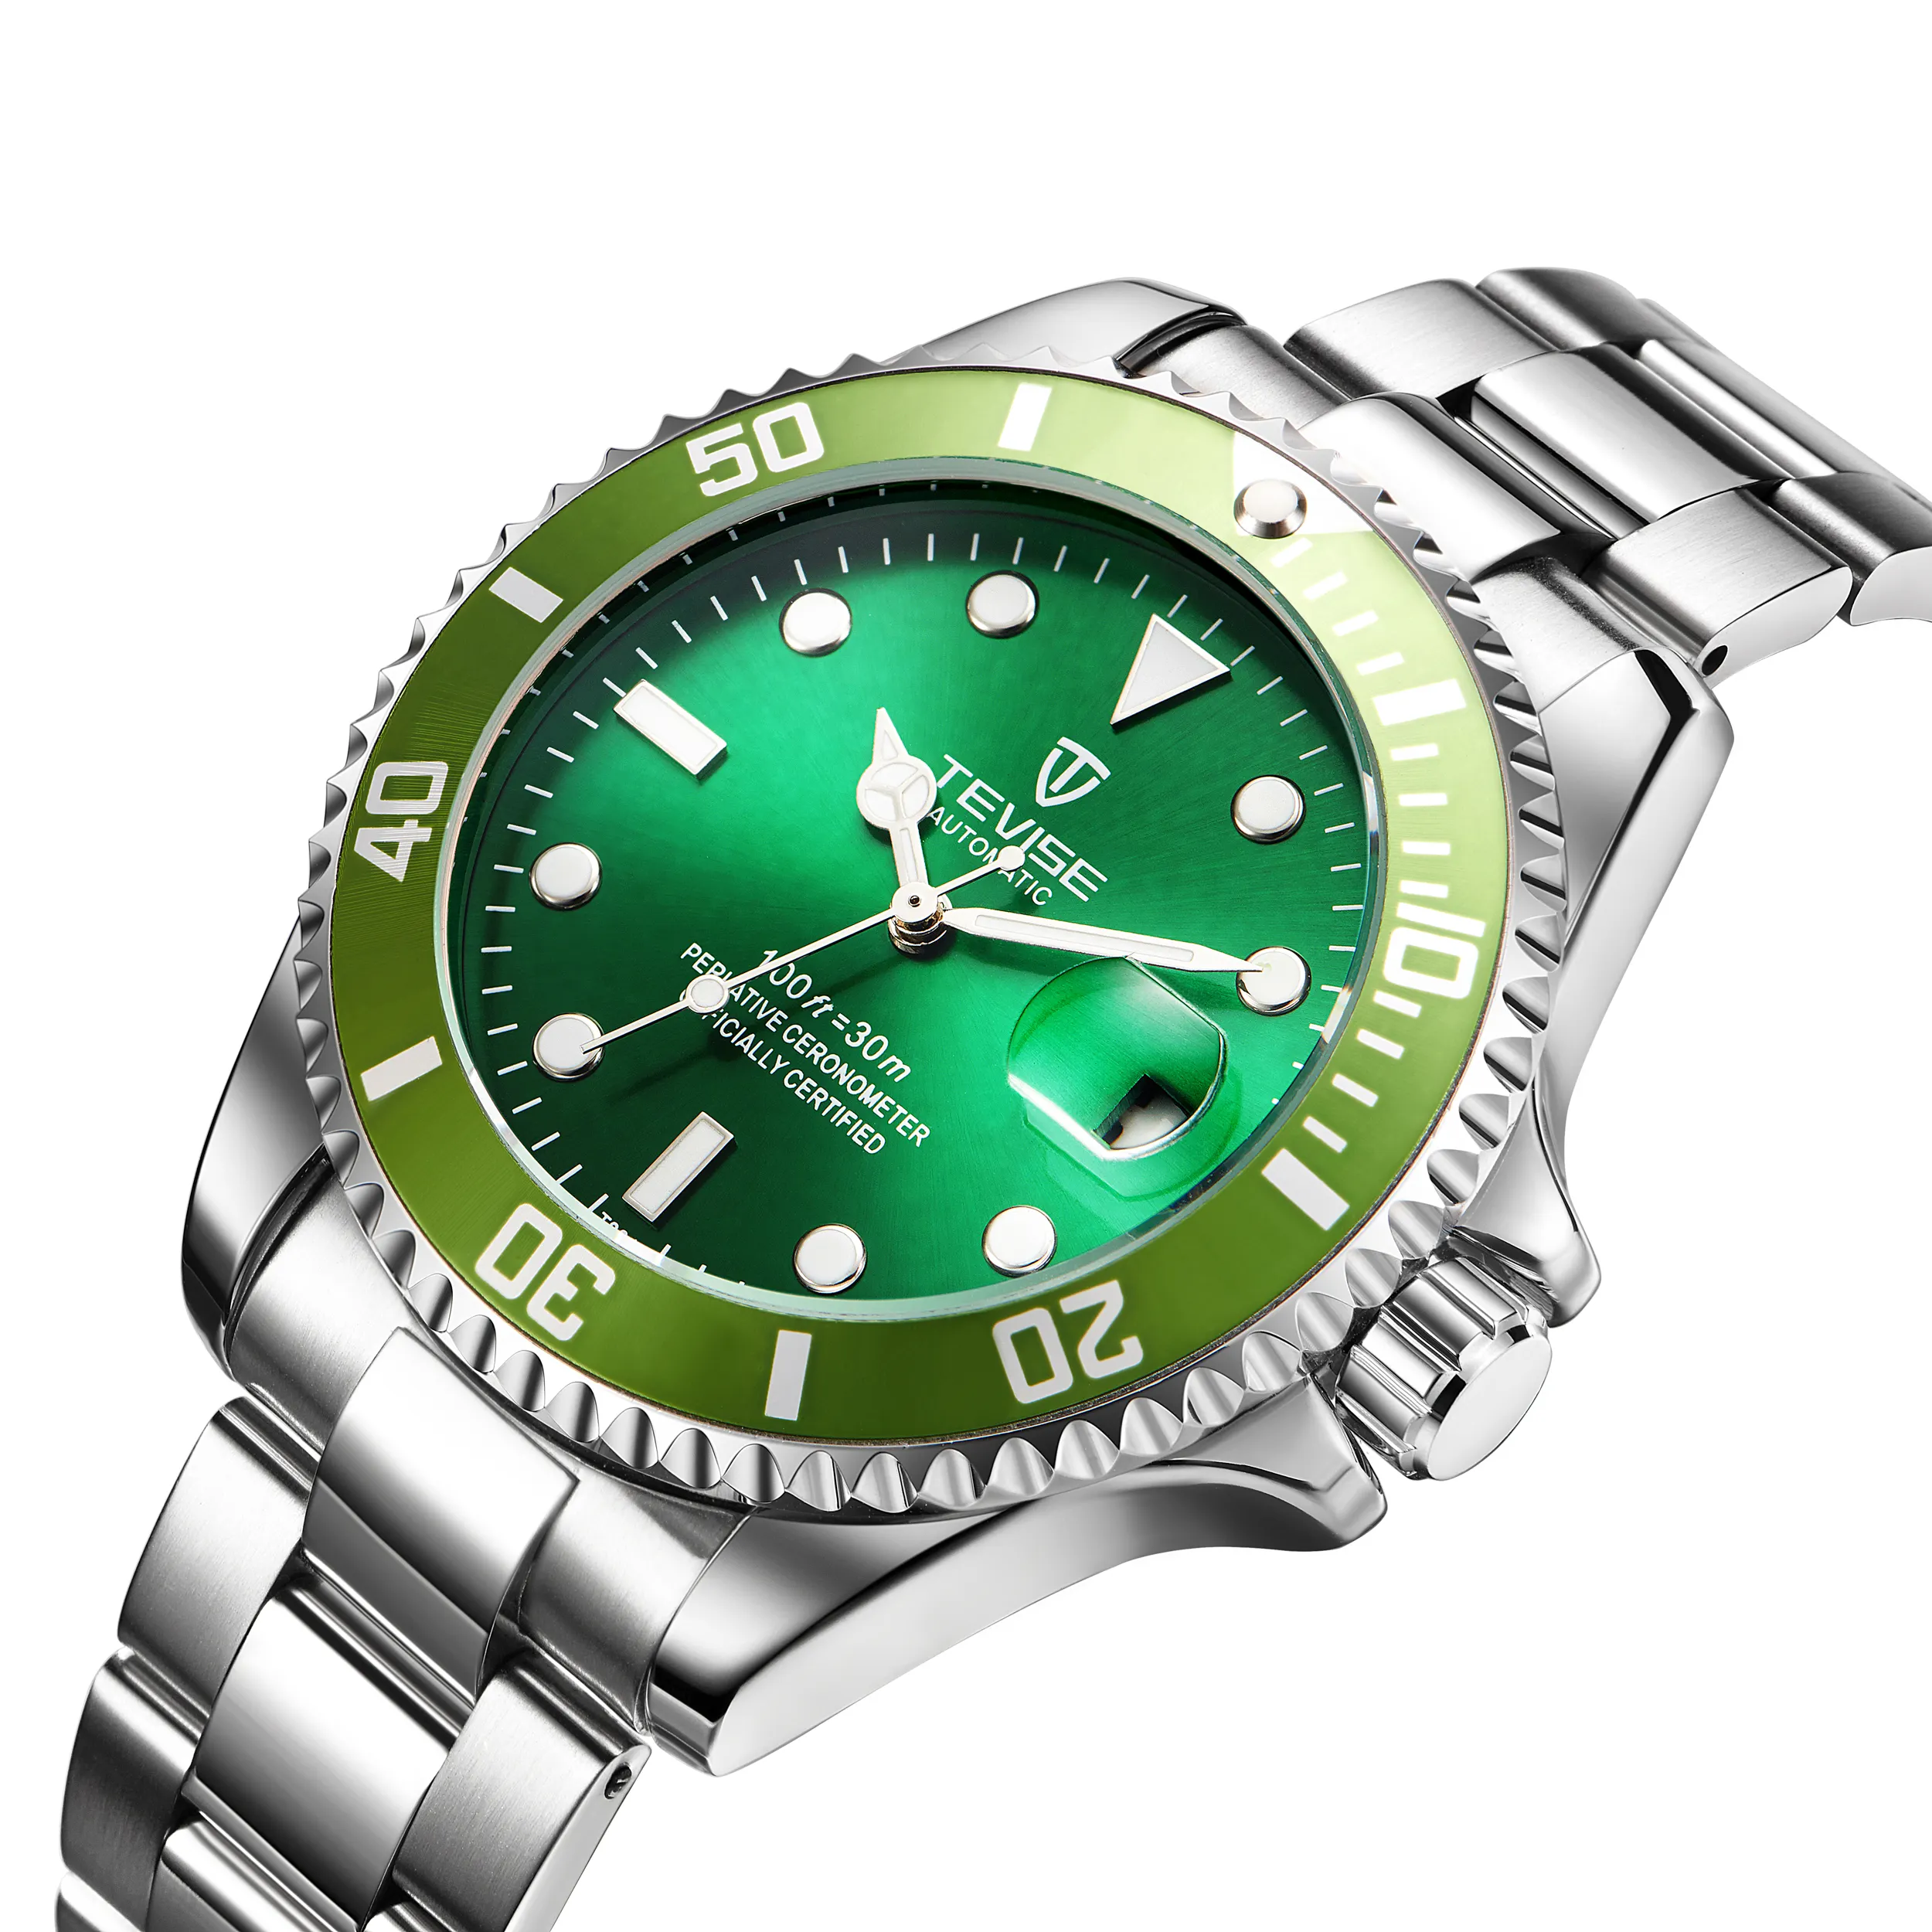 Mens fashion Watches men automatic watch wrist Brand Your Own logo Man luxury Fashion Watch relojes hombre